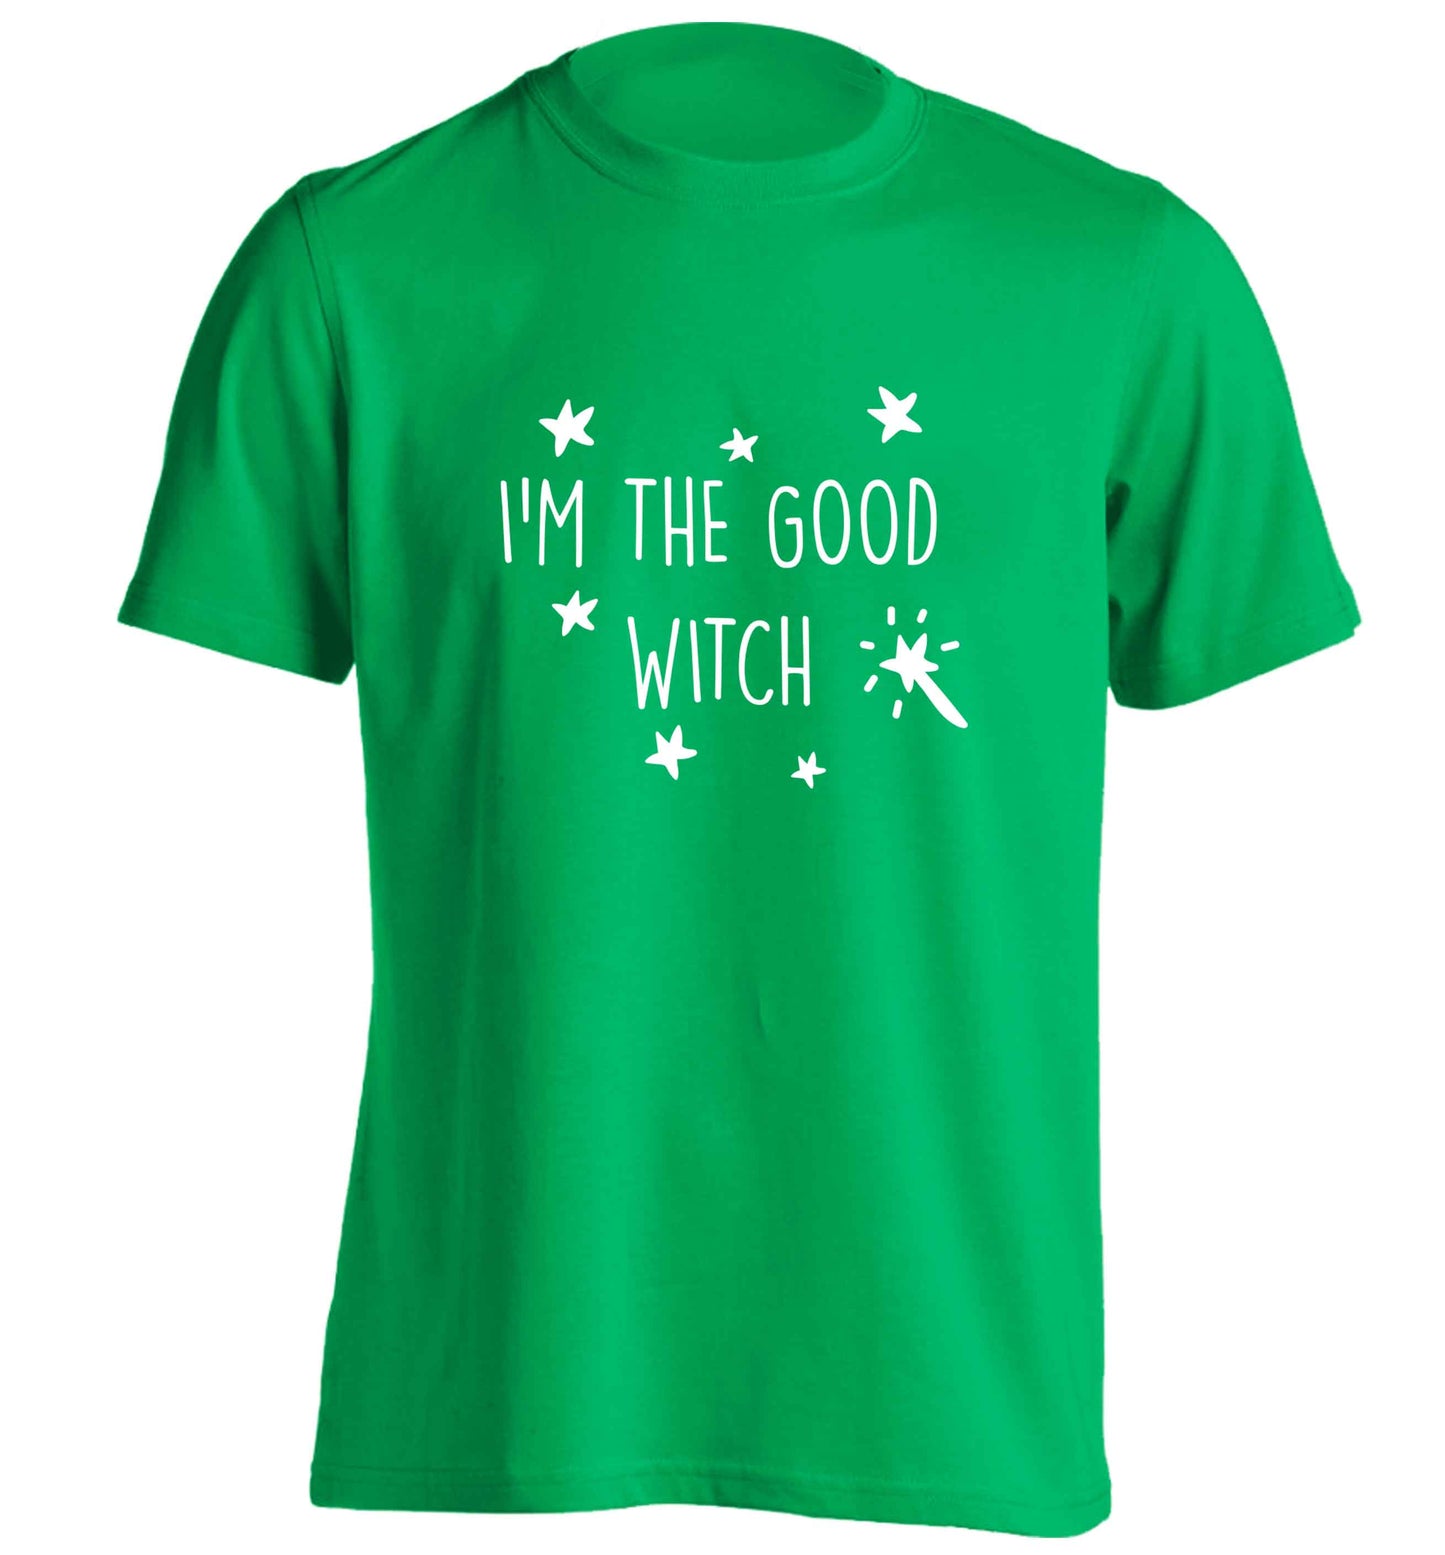 Good witch adults unisex green Tshirt 2XL